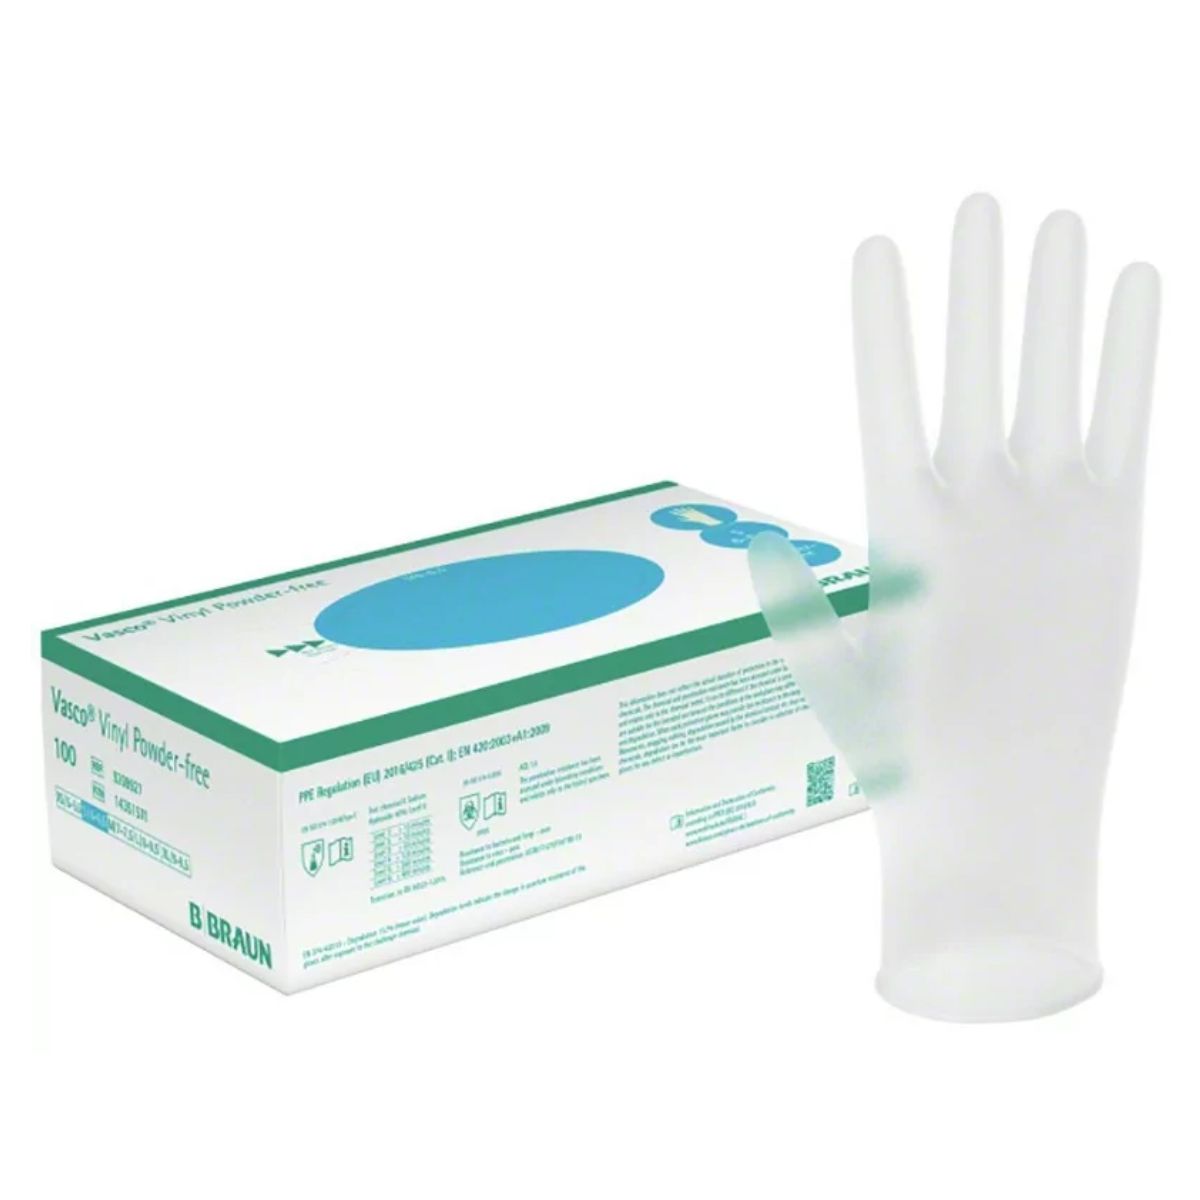 A pair of B Braun - Disposable Vinyl Powder Free Gloves - 100pcs on a white background.